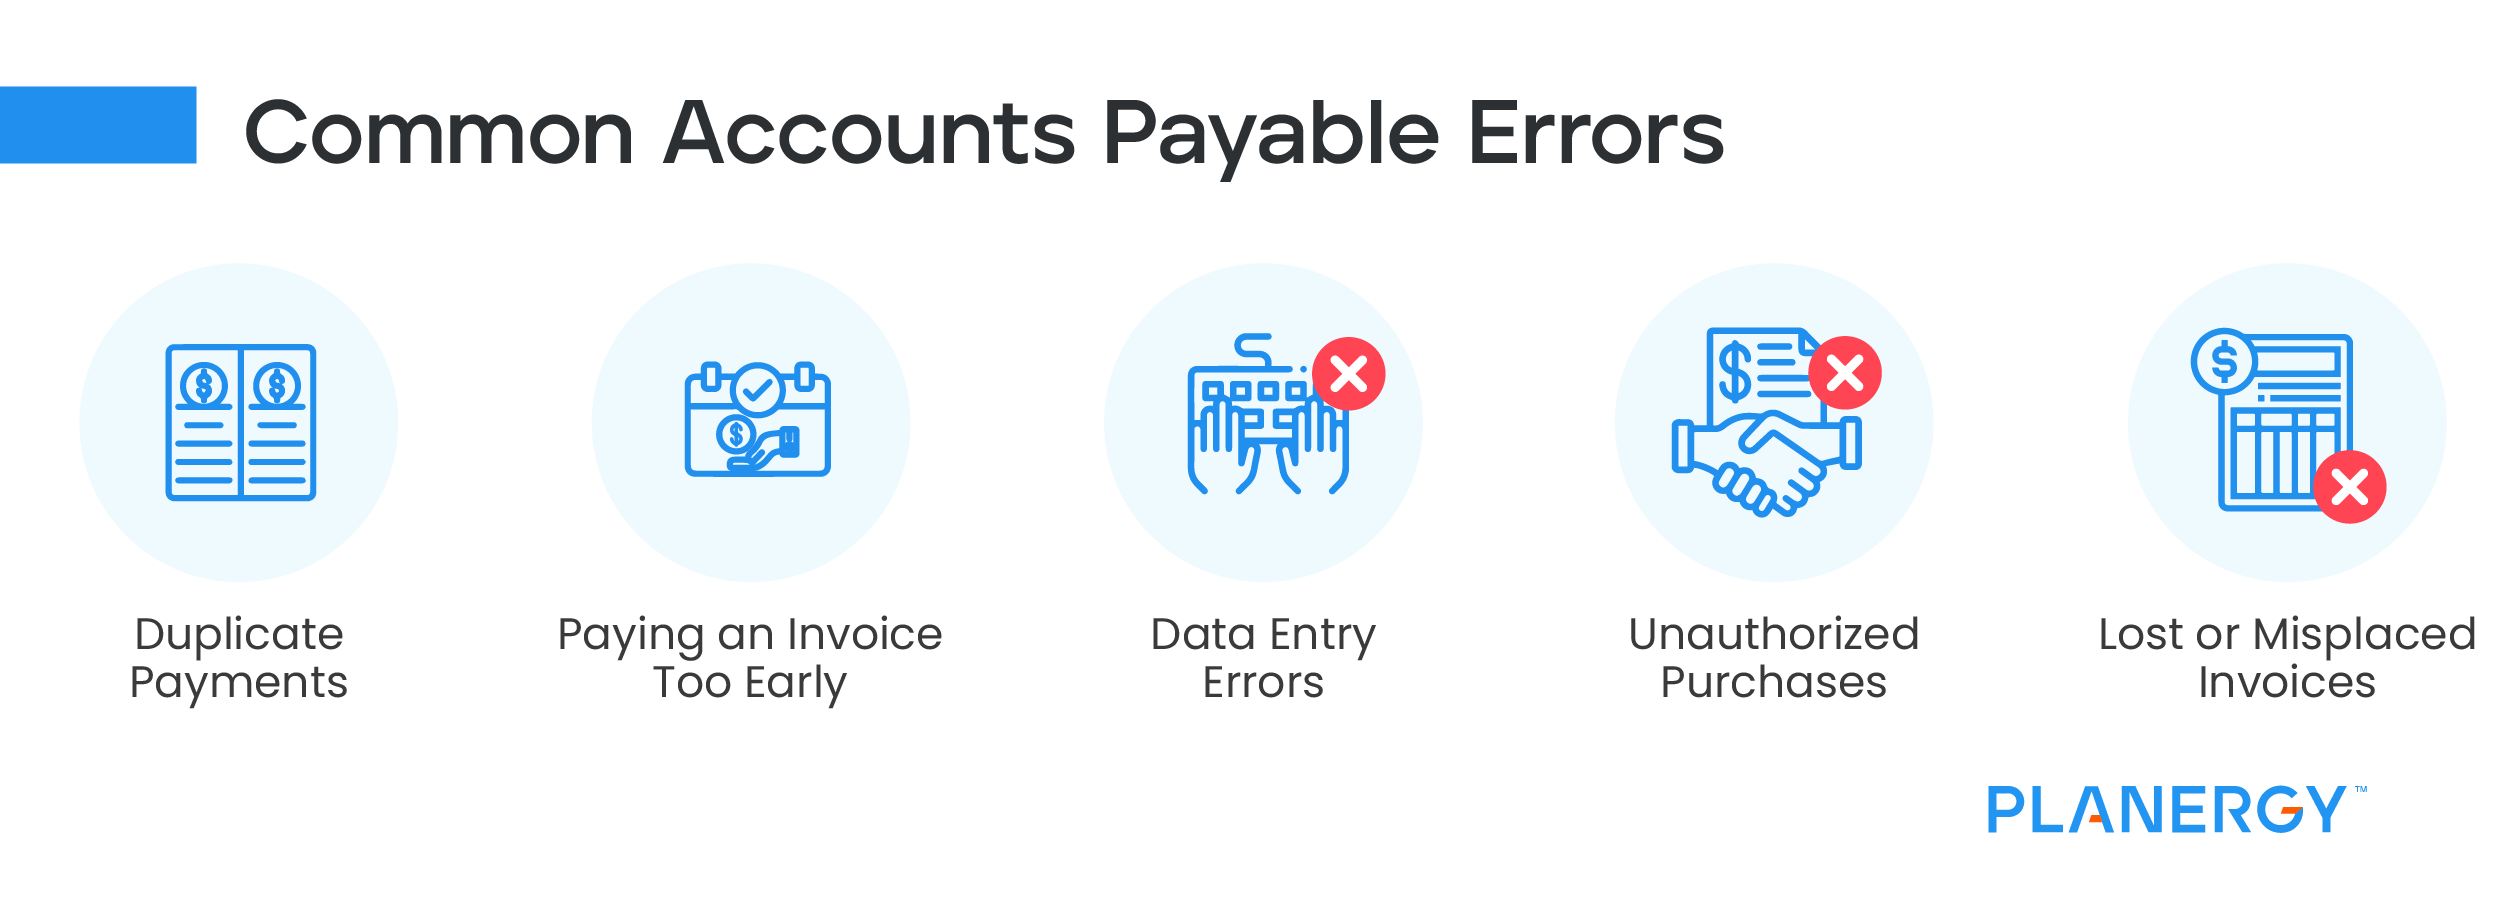 Common Accounts Payable Errors